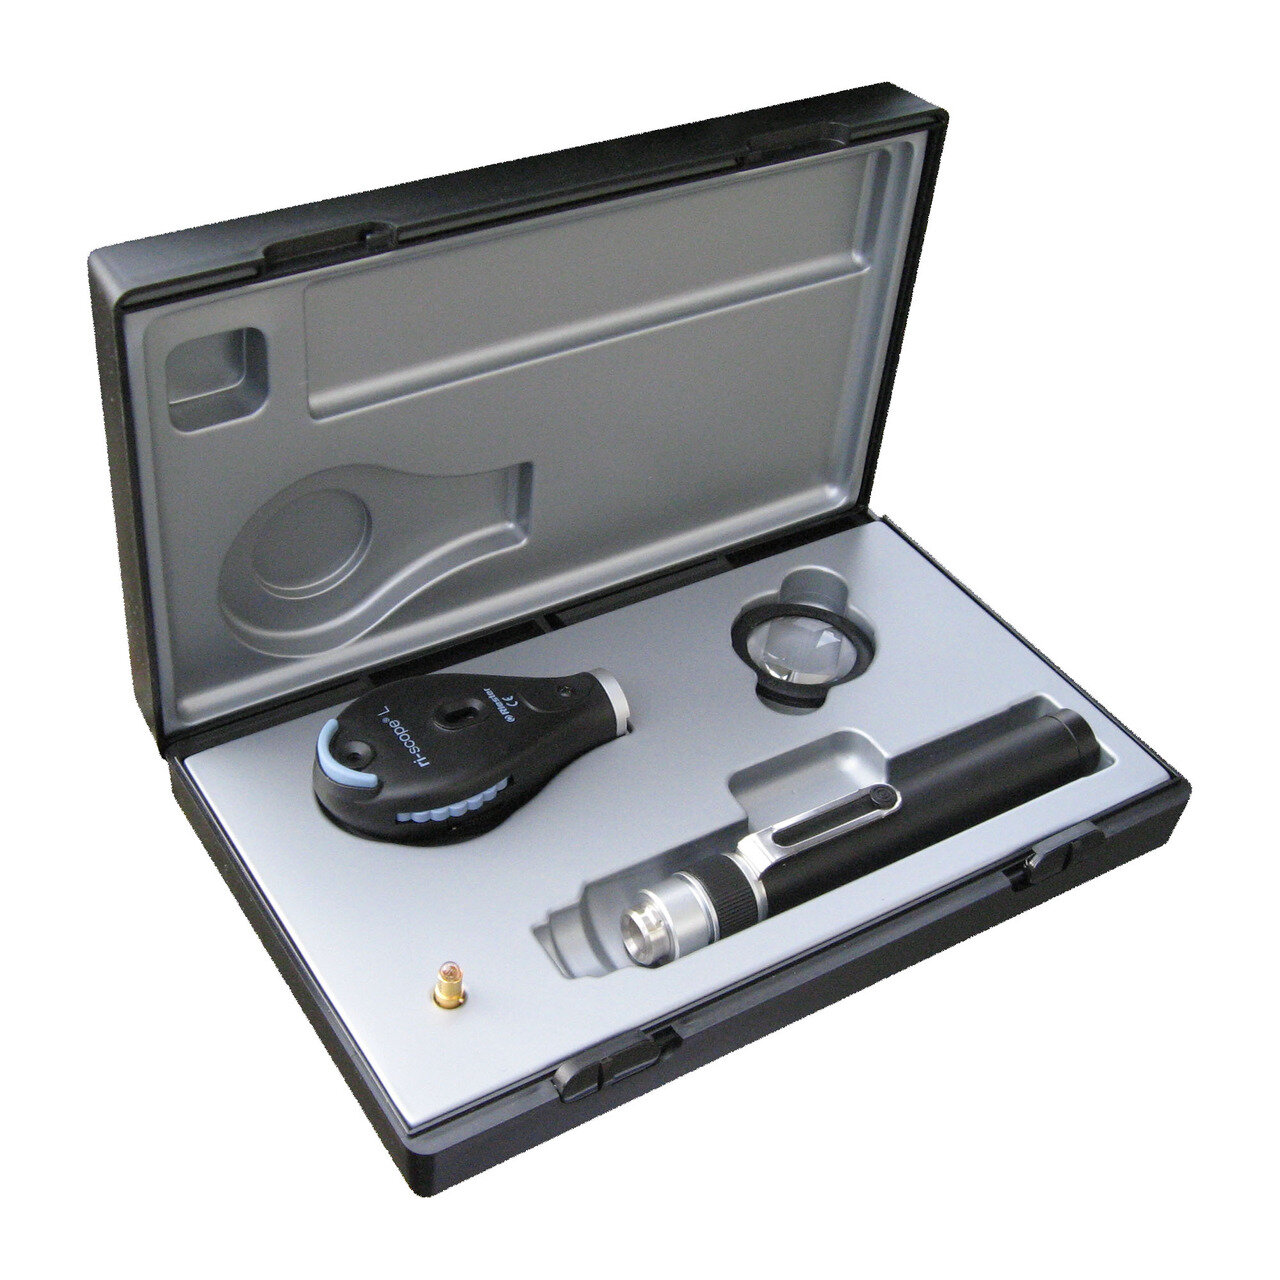 Ri-scope® офтальмоскоп L2, освещение XL 2,5 В, рукоятка типа С для двух батарей типа С или аккумулятора ri-accu® NiMH